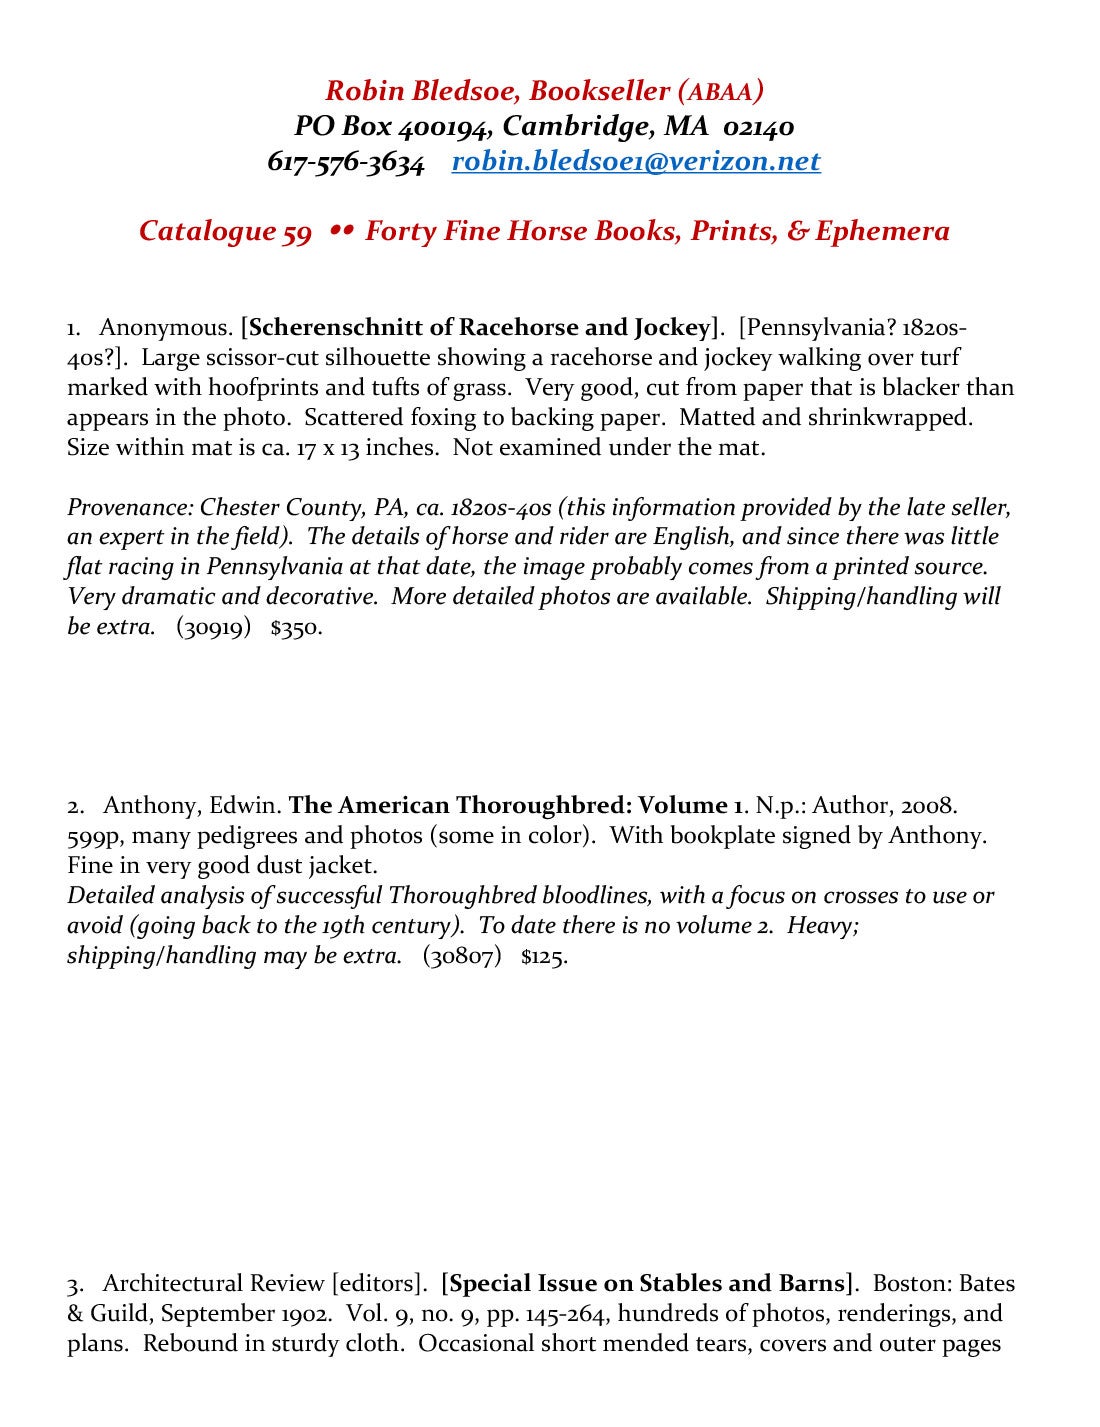 Catalogue 59: FORTY FINE HORSE BOOKS, PRINTS, & EPHEMERA (2022)